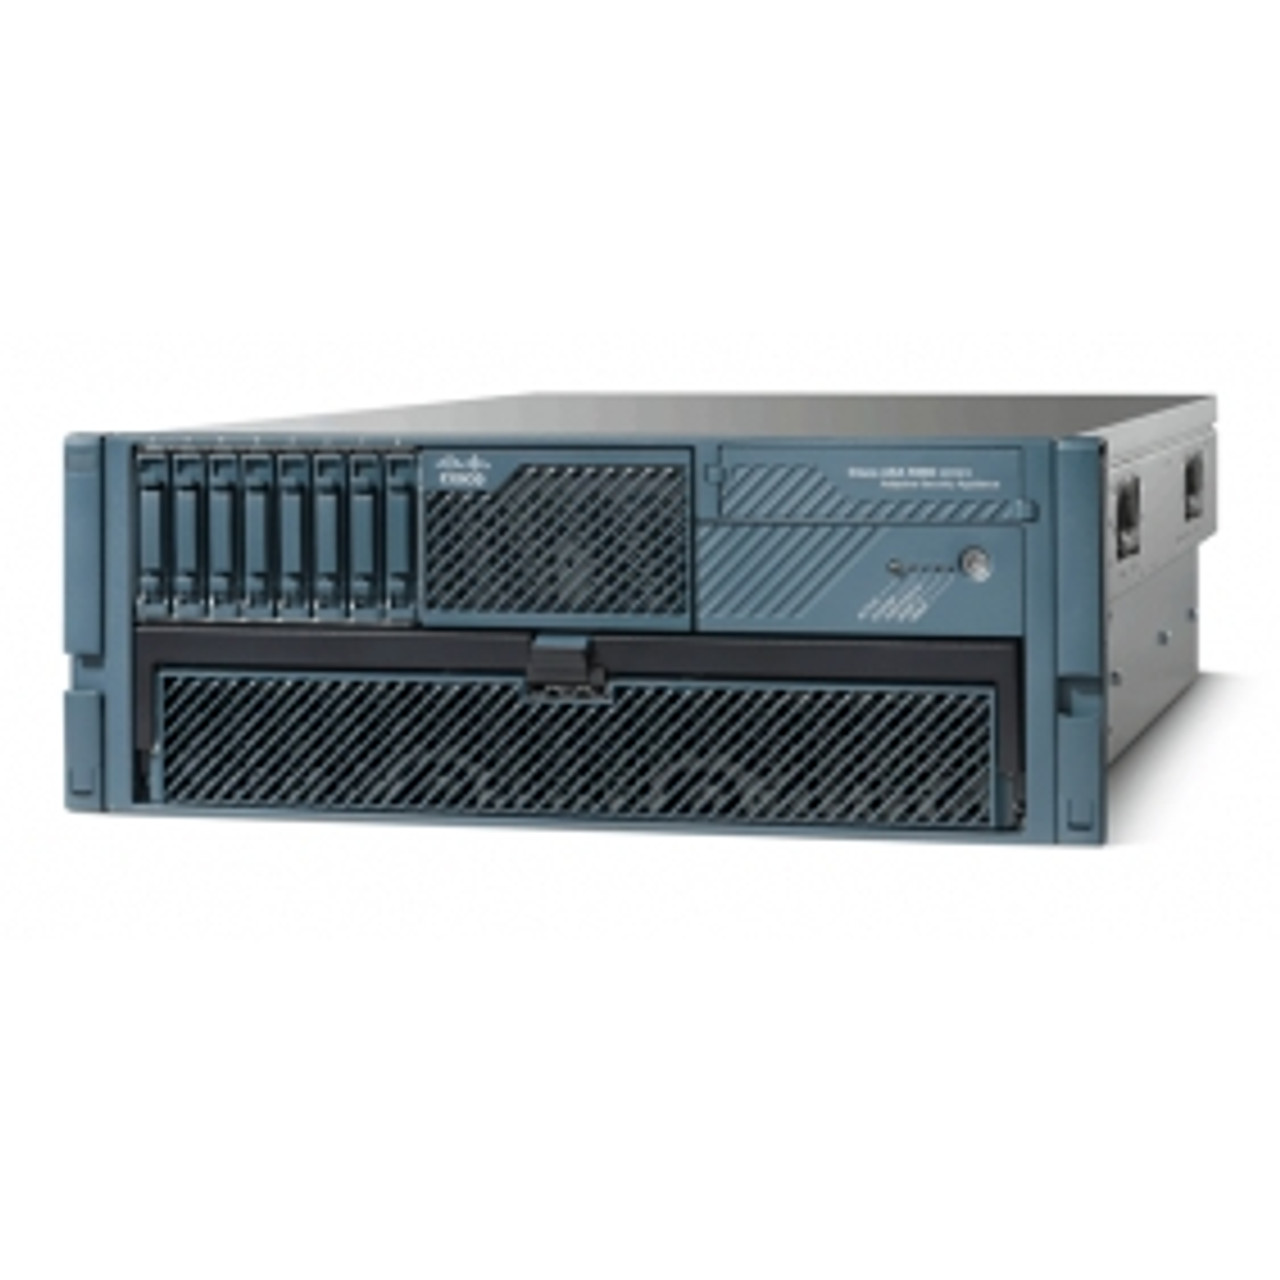 Cisco ASA 5580-40 Firewall Edition 8 Gigabit Ethernet Bundle - security appliance